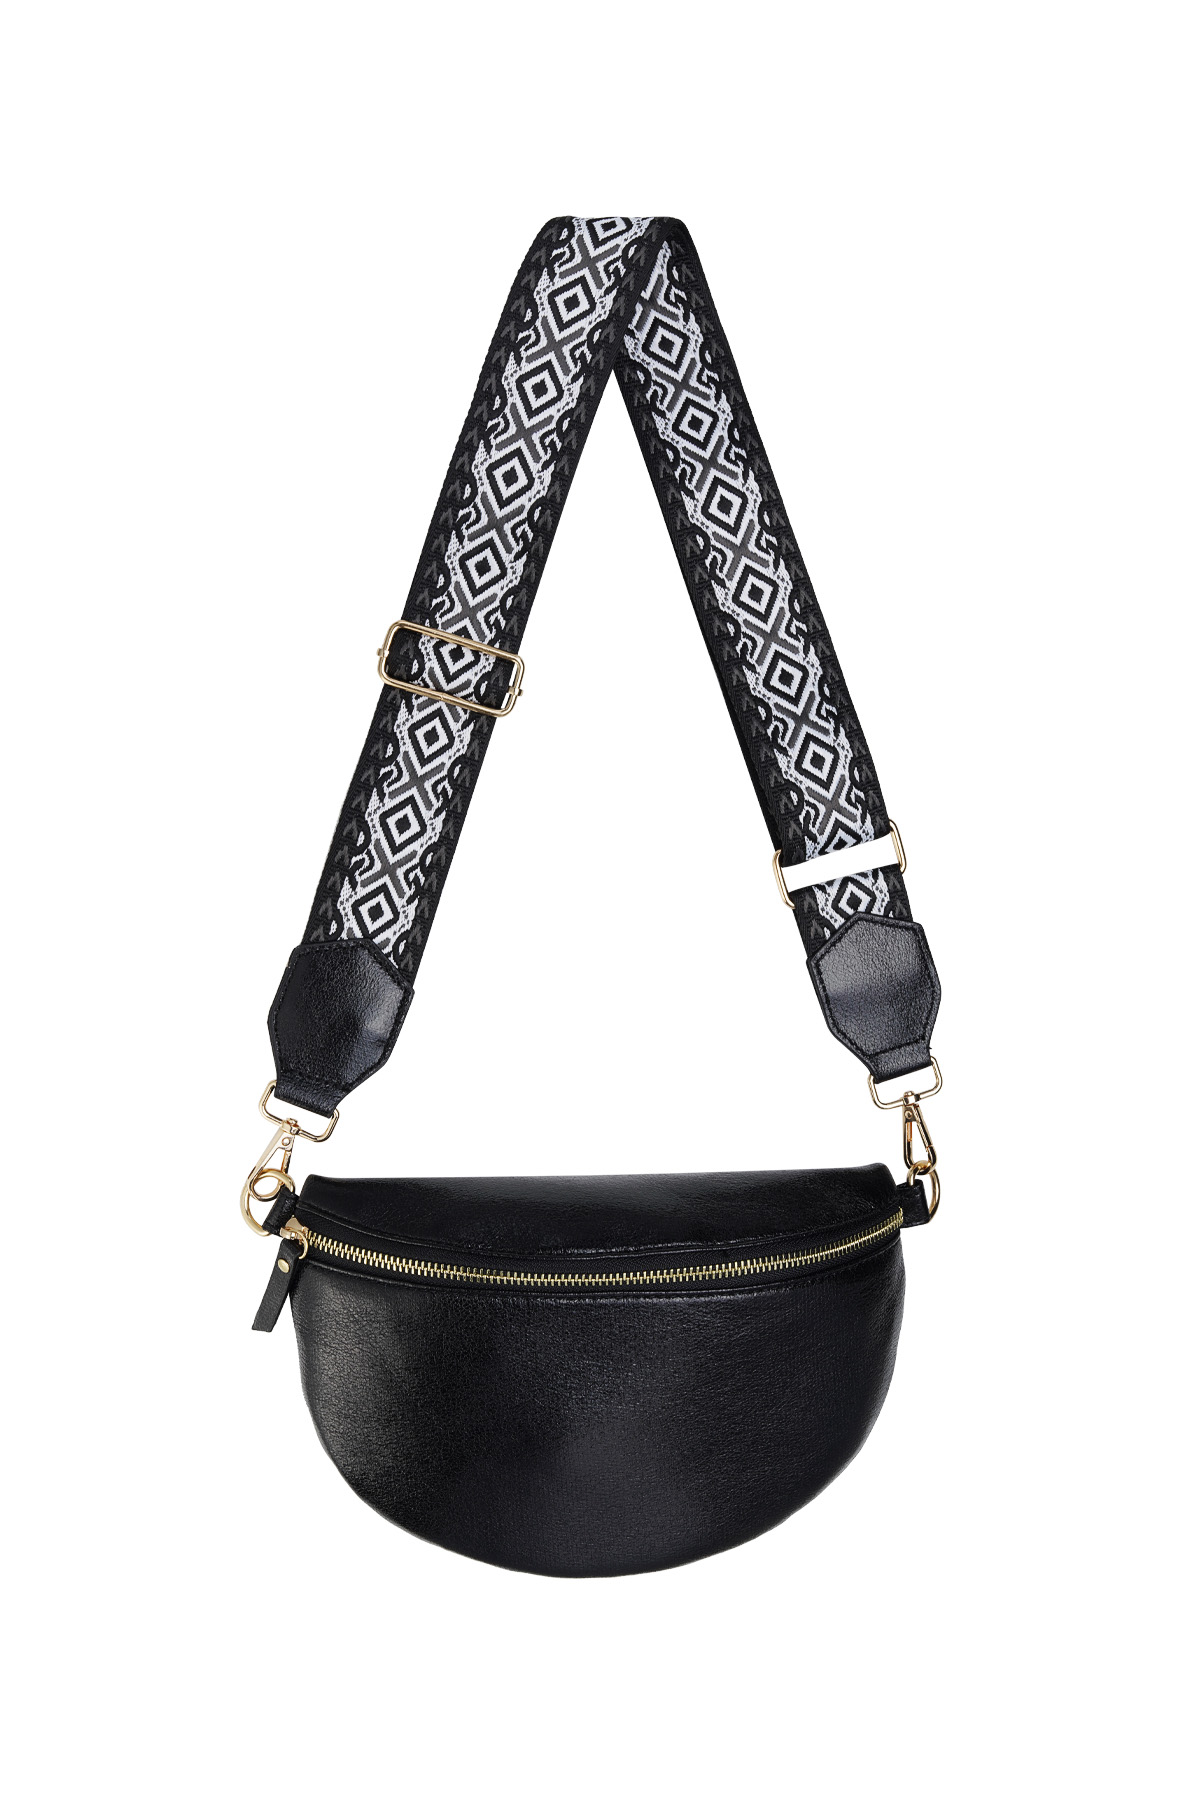 Shoulder bag with unique strap - black